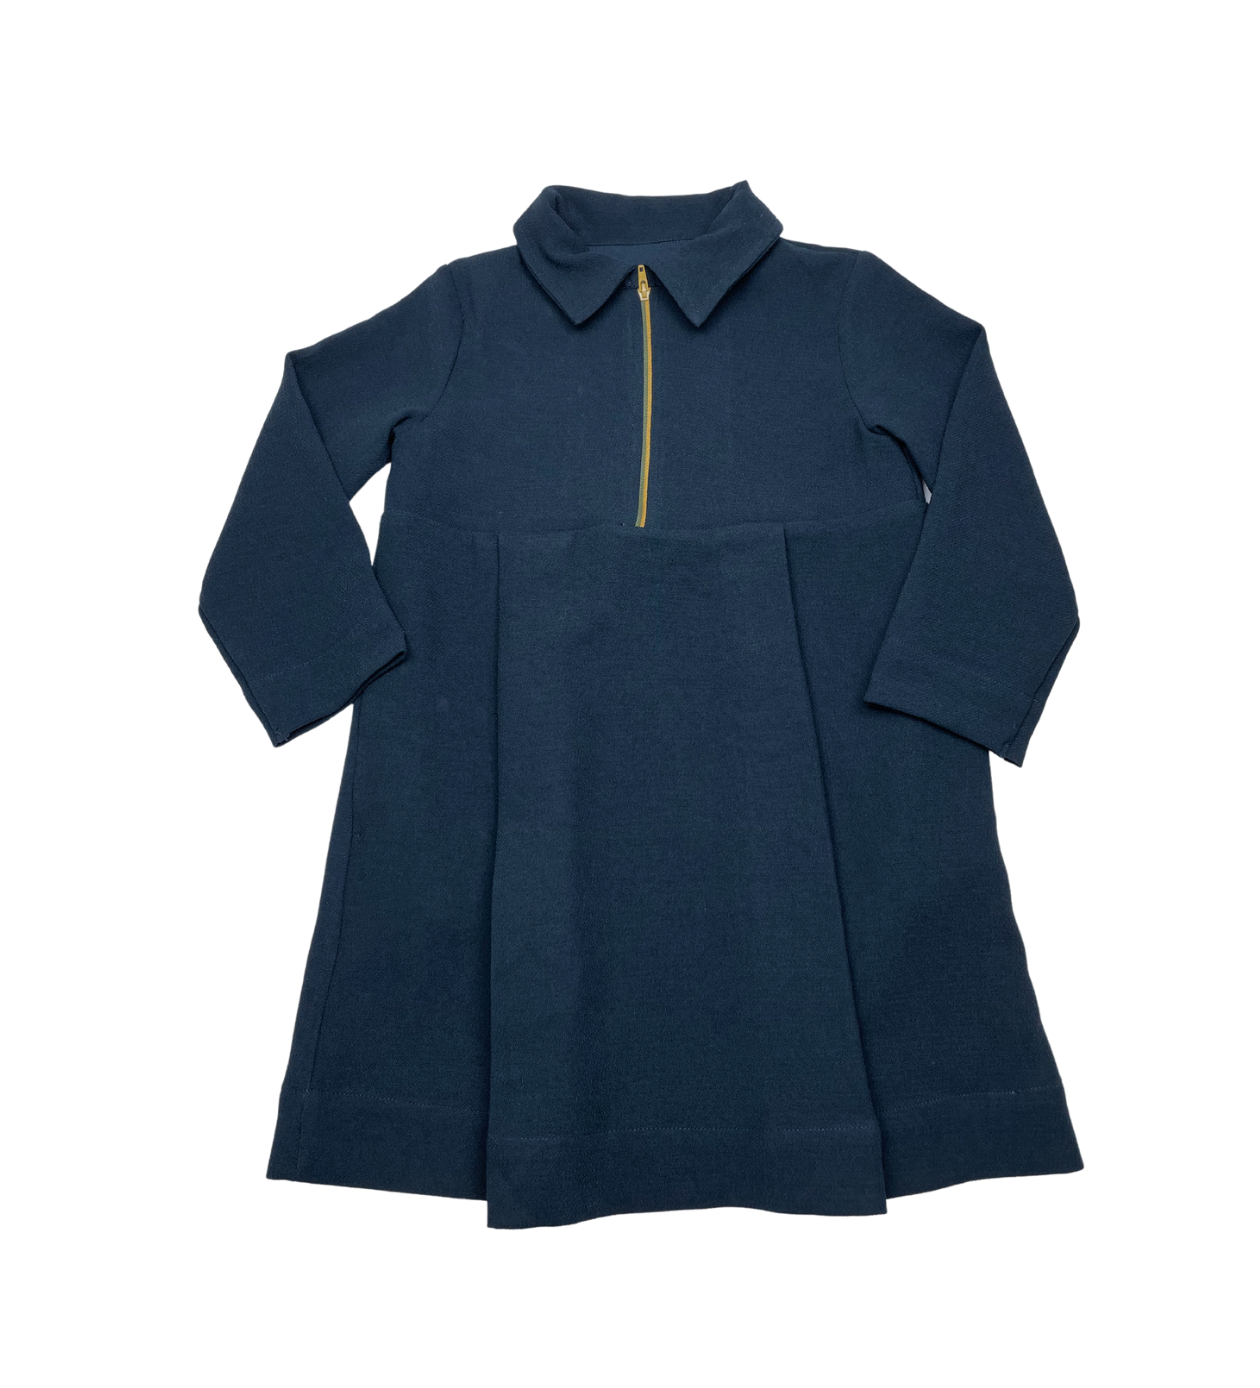 BELLEROSE - Robe bleue marine à poches - 4 ans